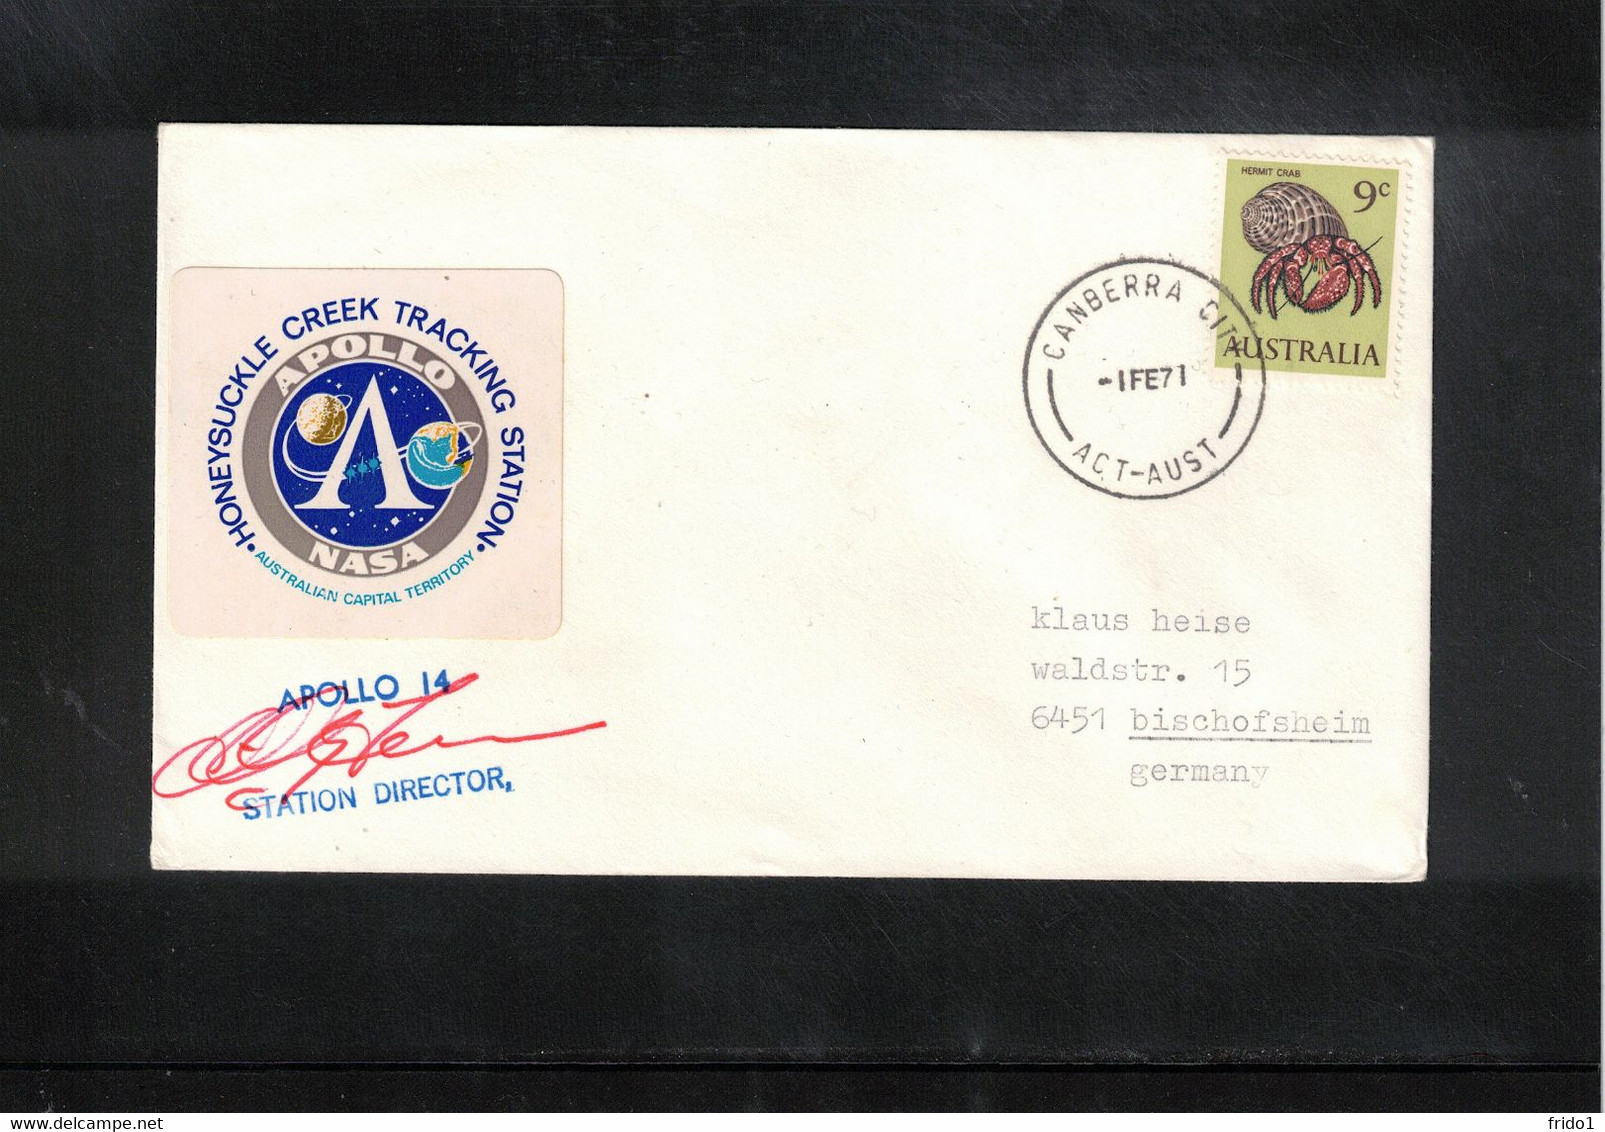 Australia 1971 Space / Raumfahrt Apollo 14 Honeysuckle Creek Tracking Station Interesting Signed Letter - Ozeanien